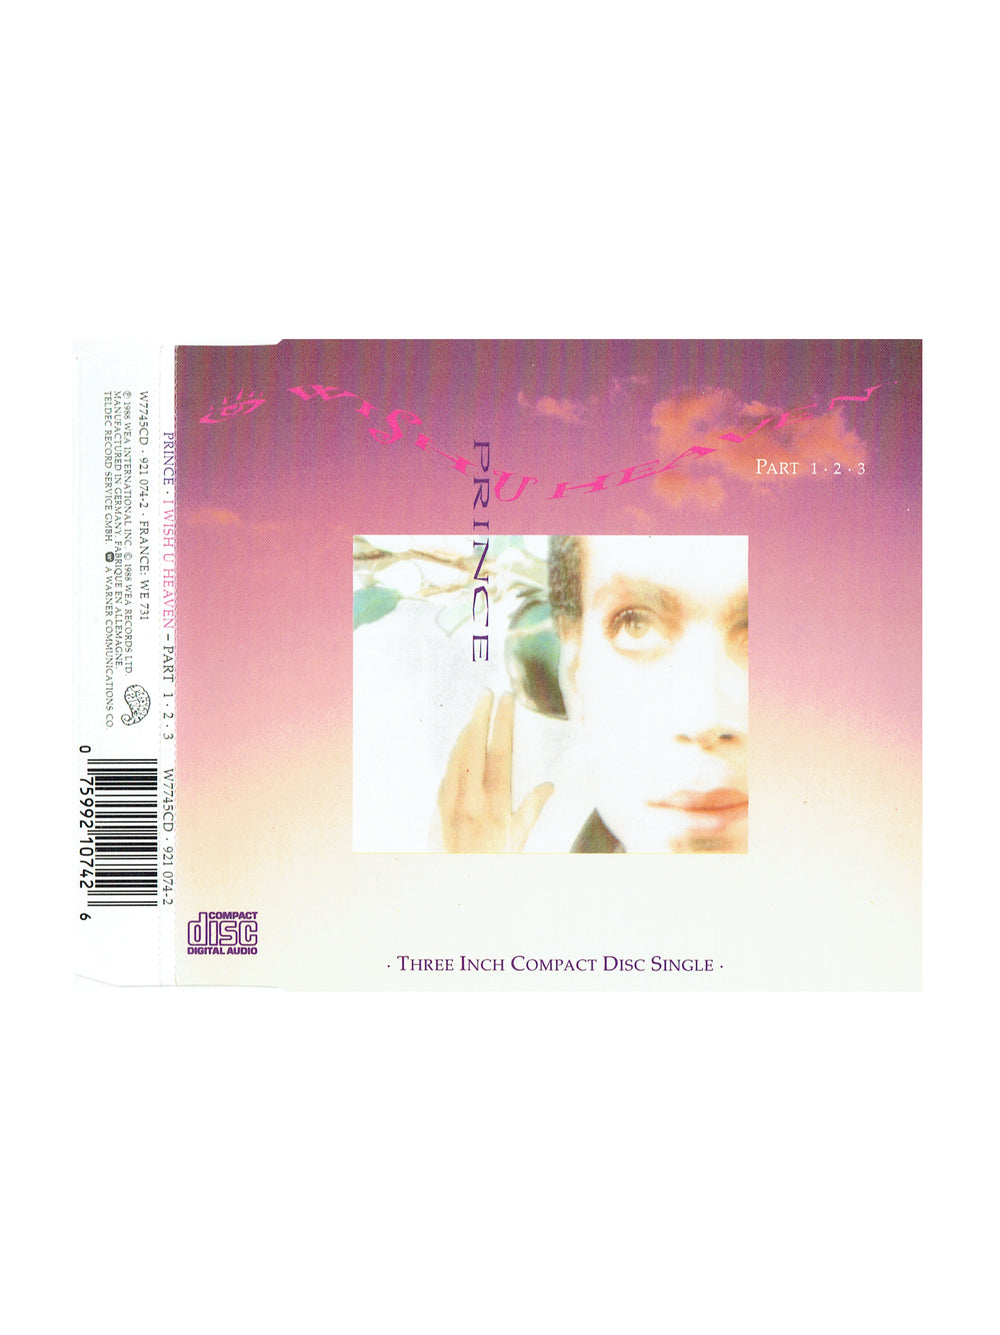 Prince – I Wish U Heaven Parts 1-2-3 CD Mini Single UK & Europe Released: 1988